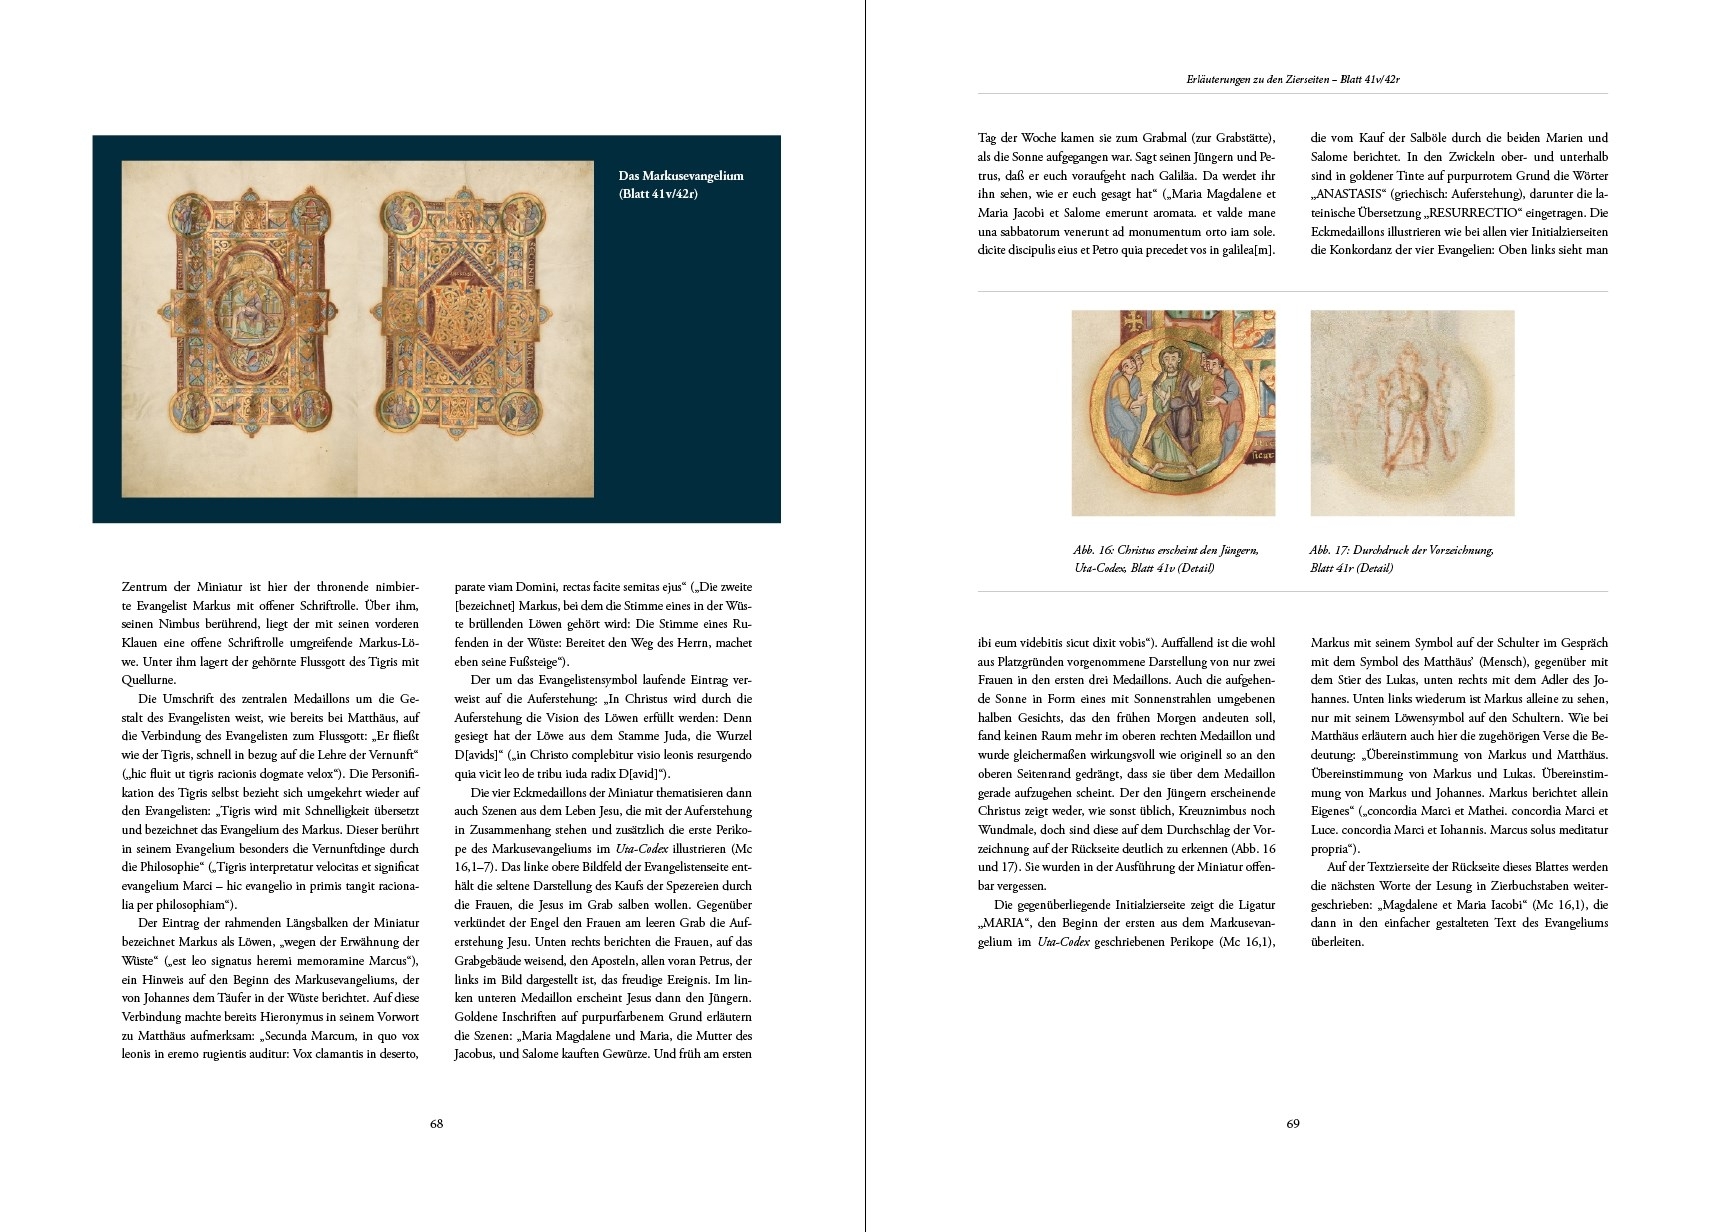 Kunstbuch-Edition des Uta-Codex, p. 68-69